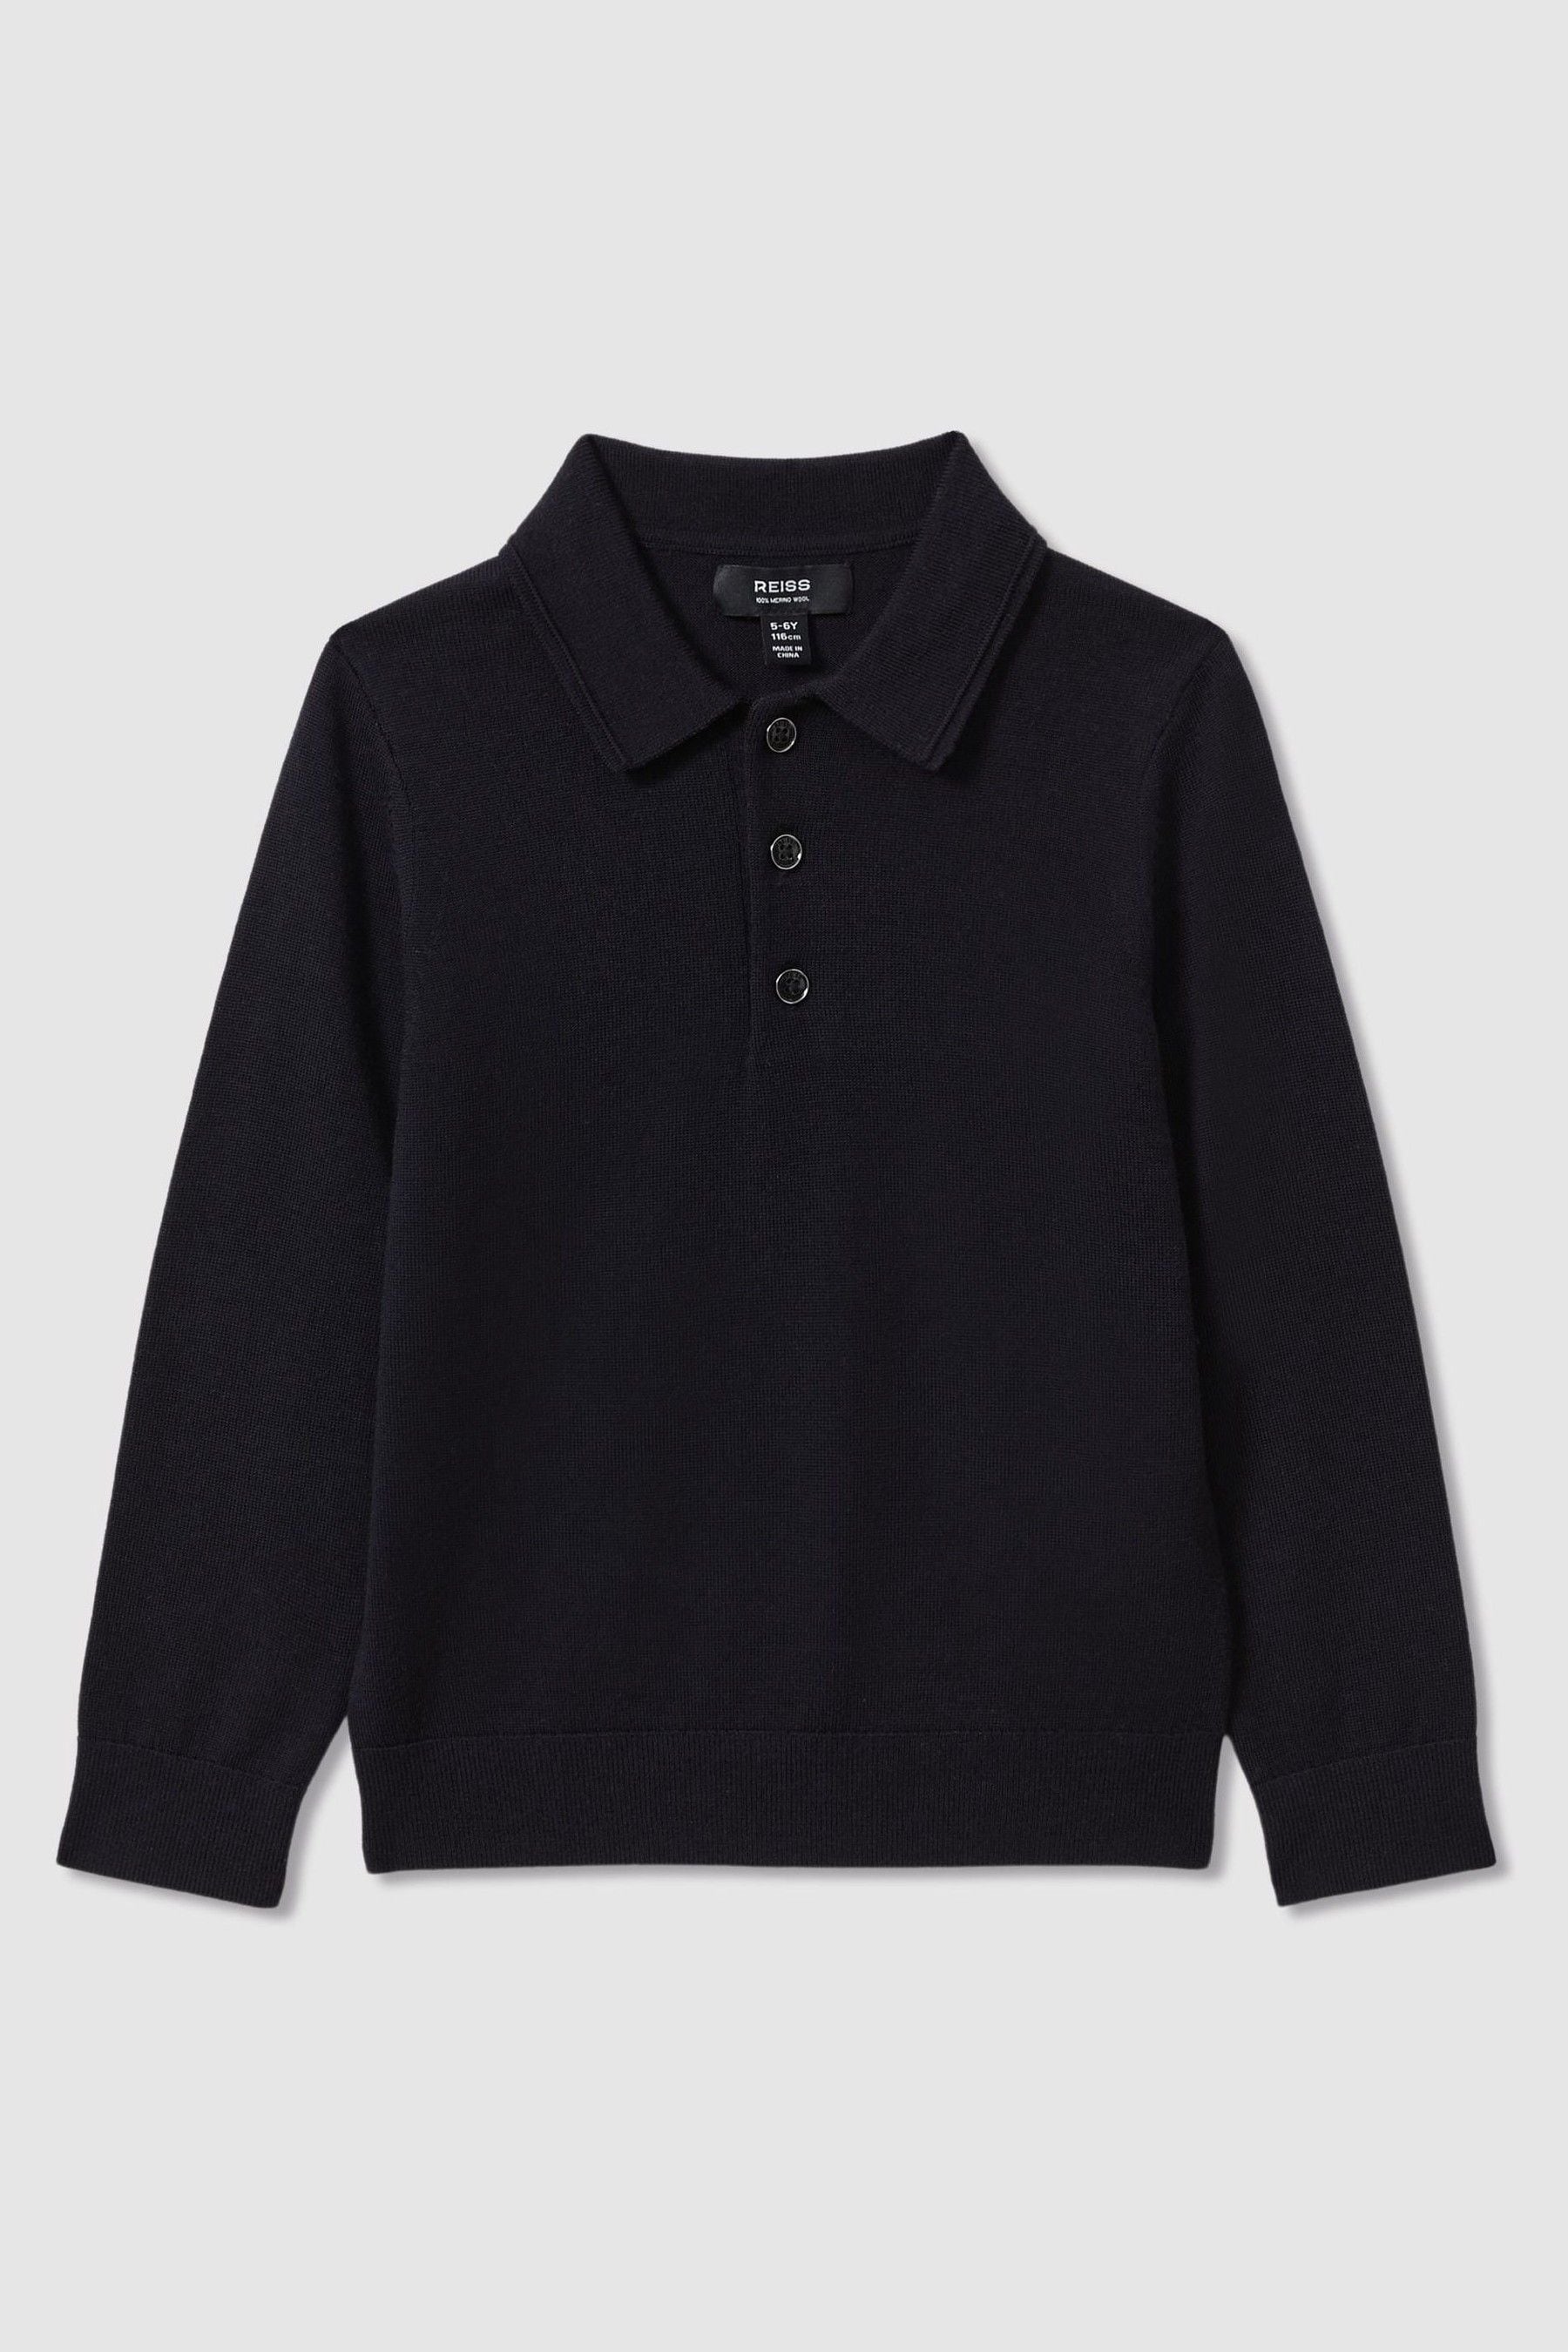 Trafford - Navy Teen Merino Wool Polo Shirt